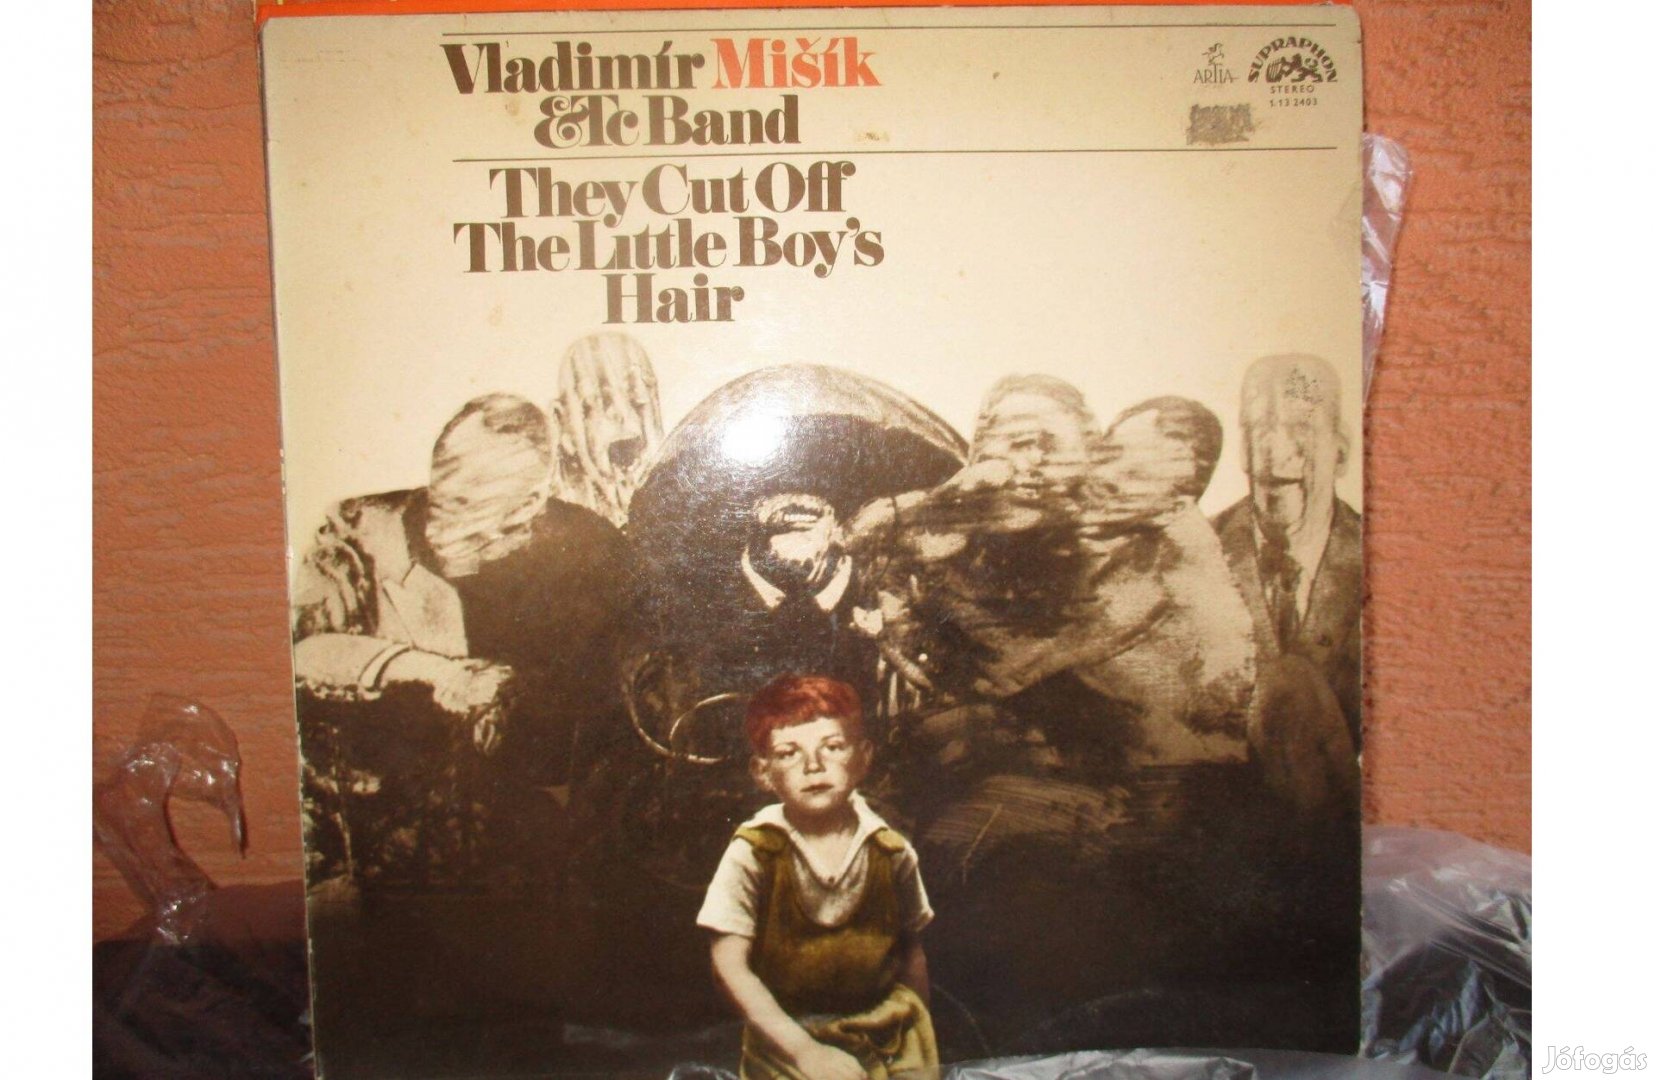 Vladimir Misik & Tc Band bakelit hanglemez eladó